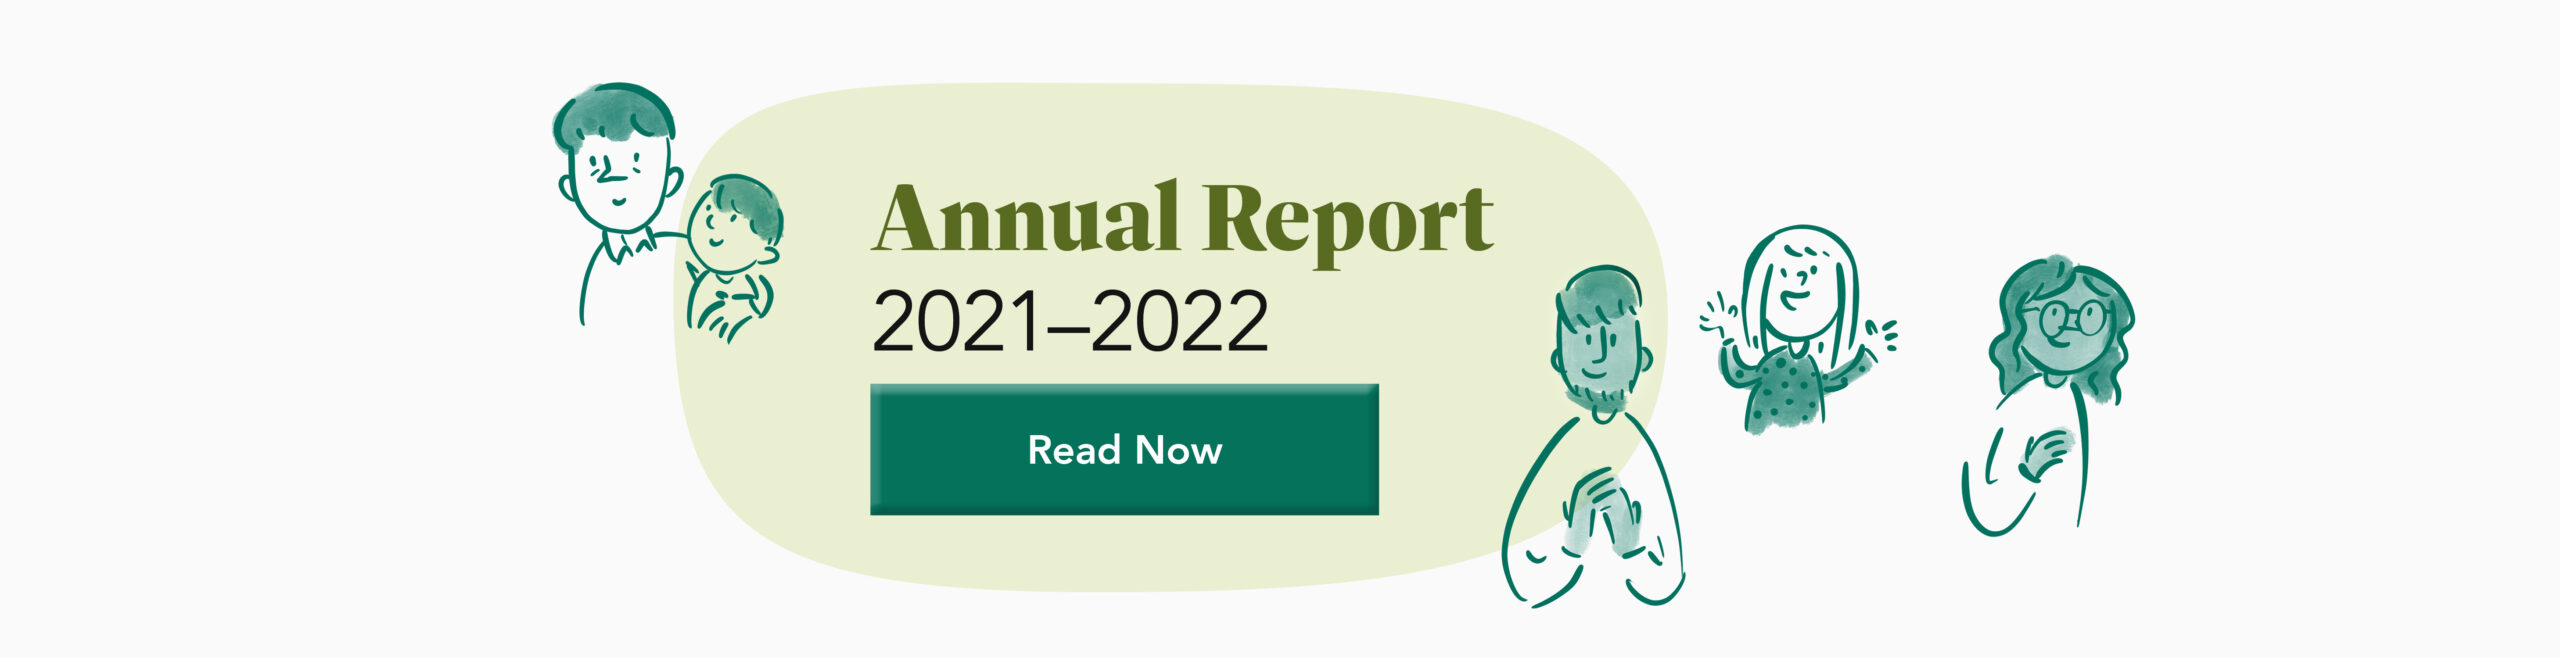 Annual Report slider